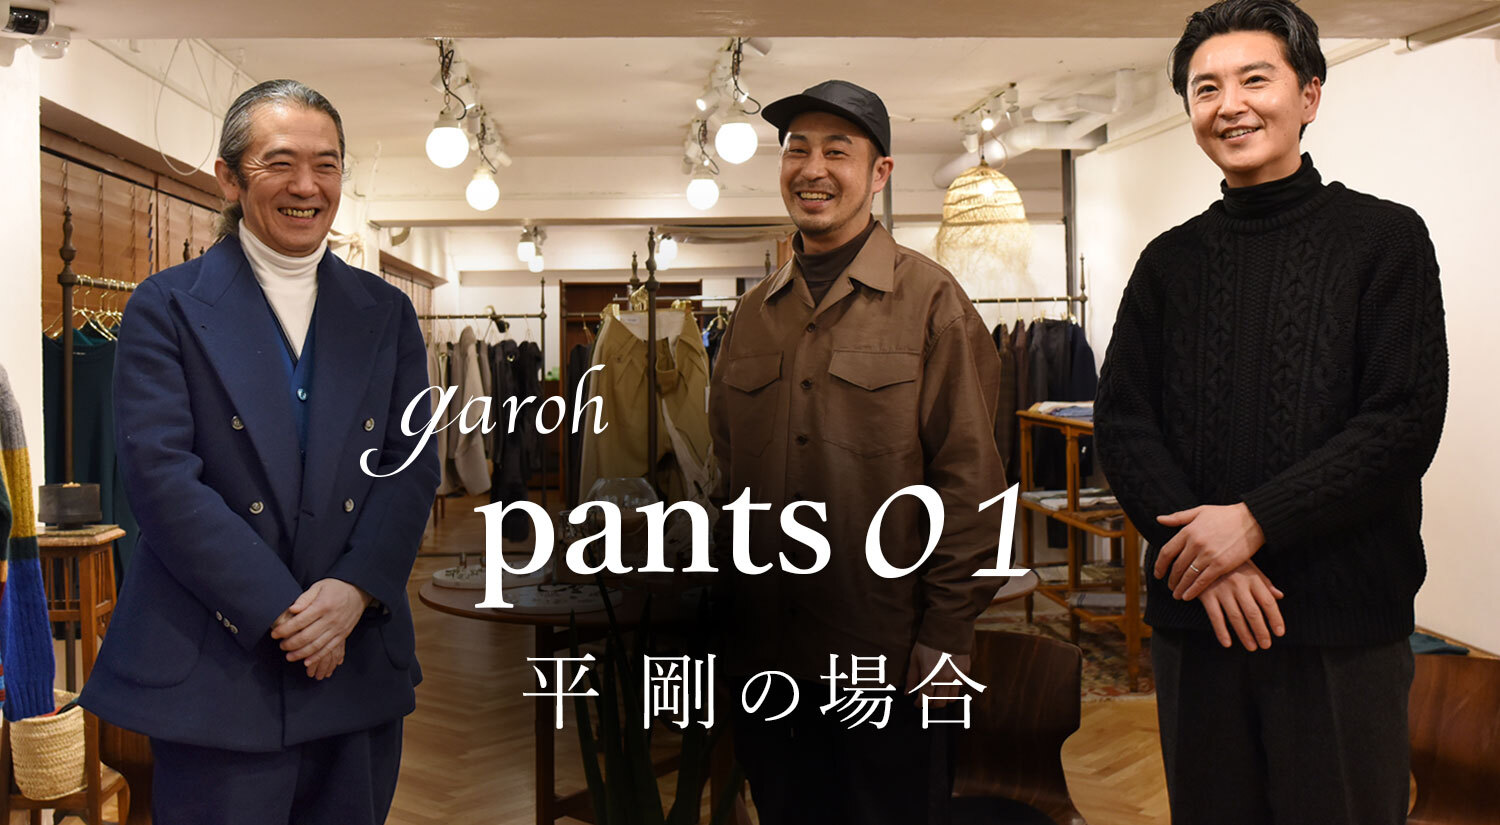 garoh pants 01 平 剛の場合　公開しました